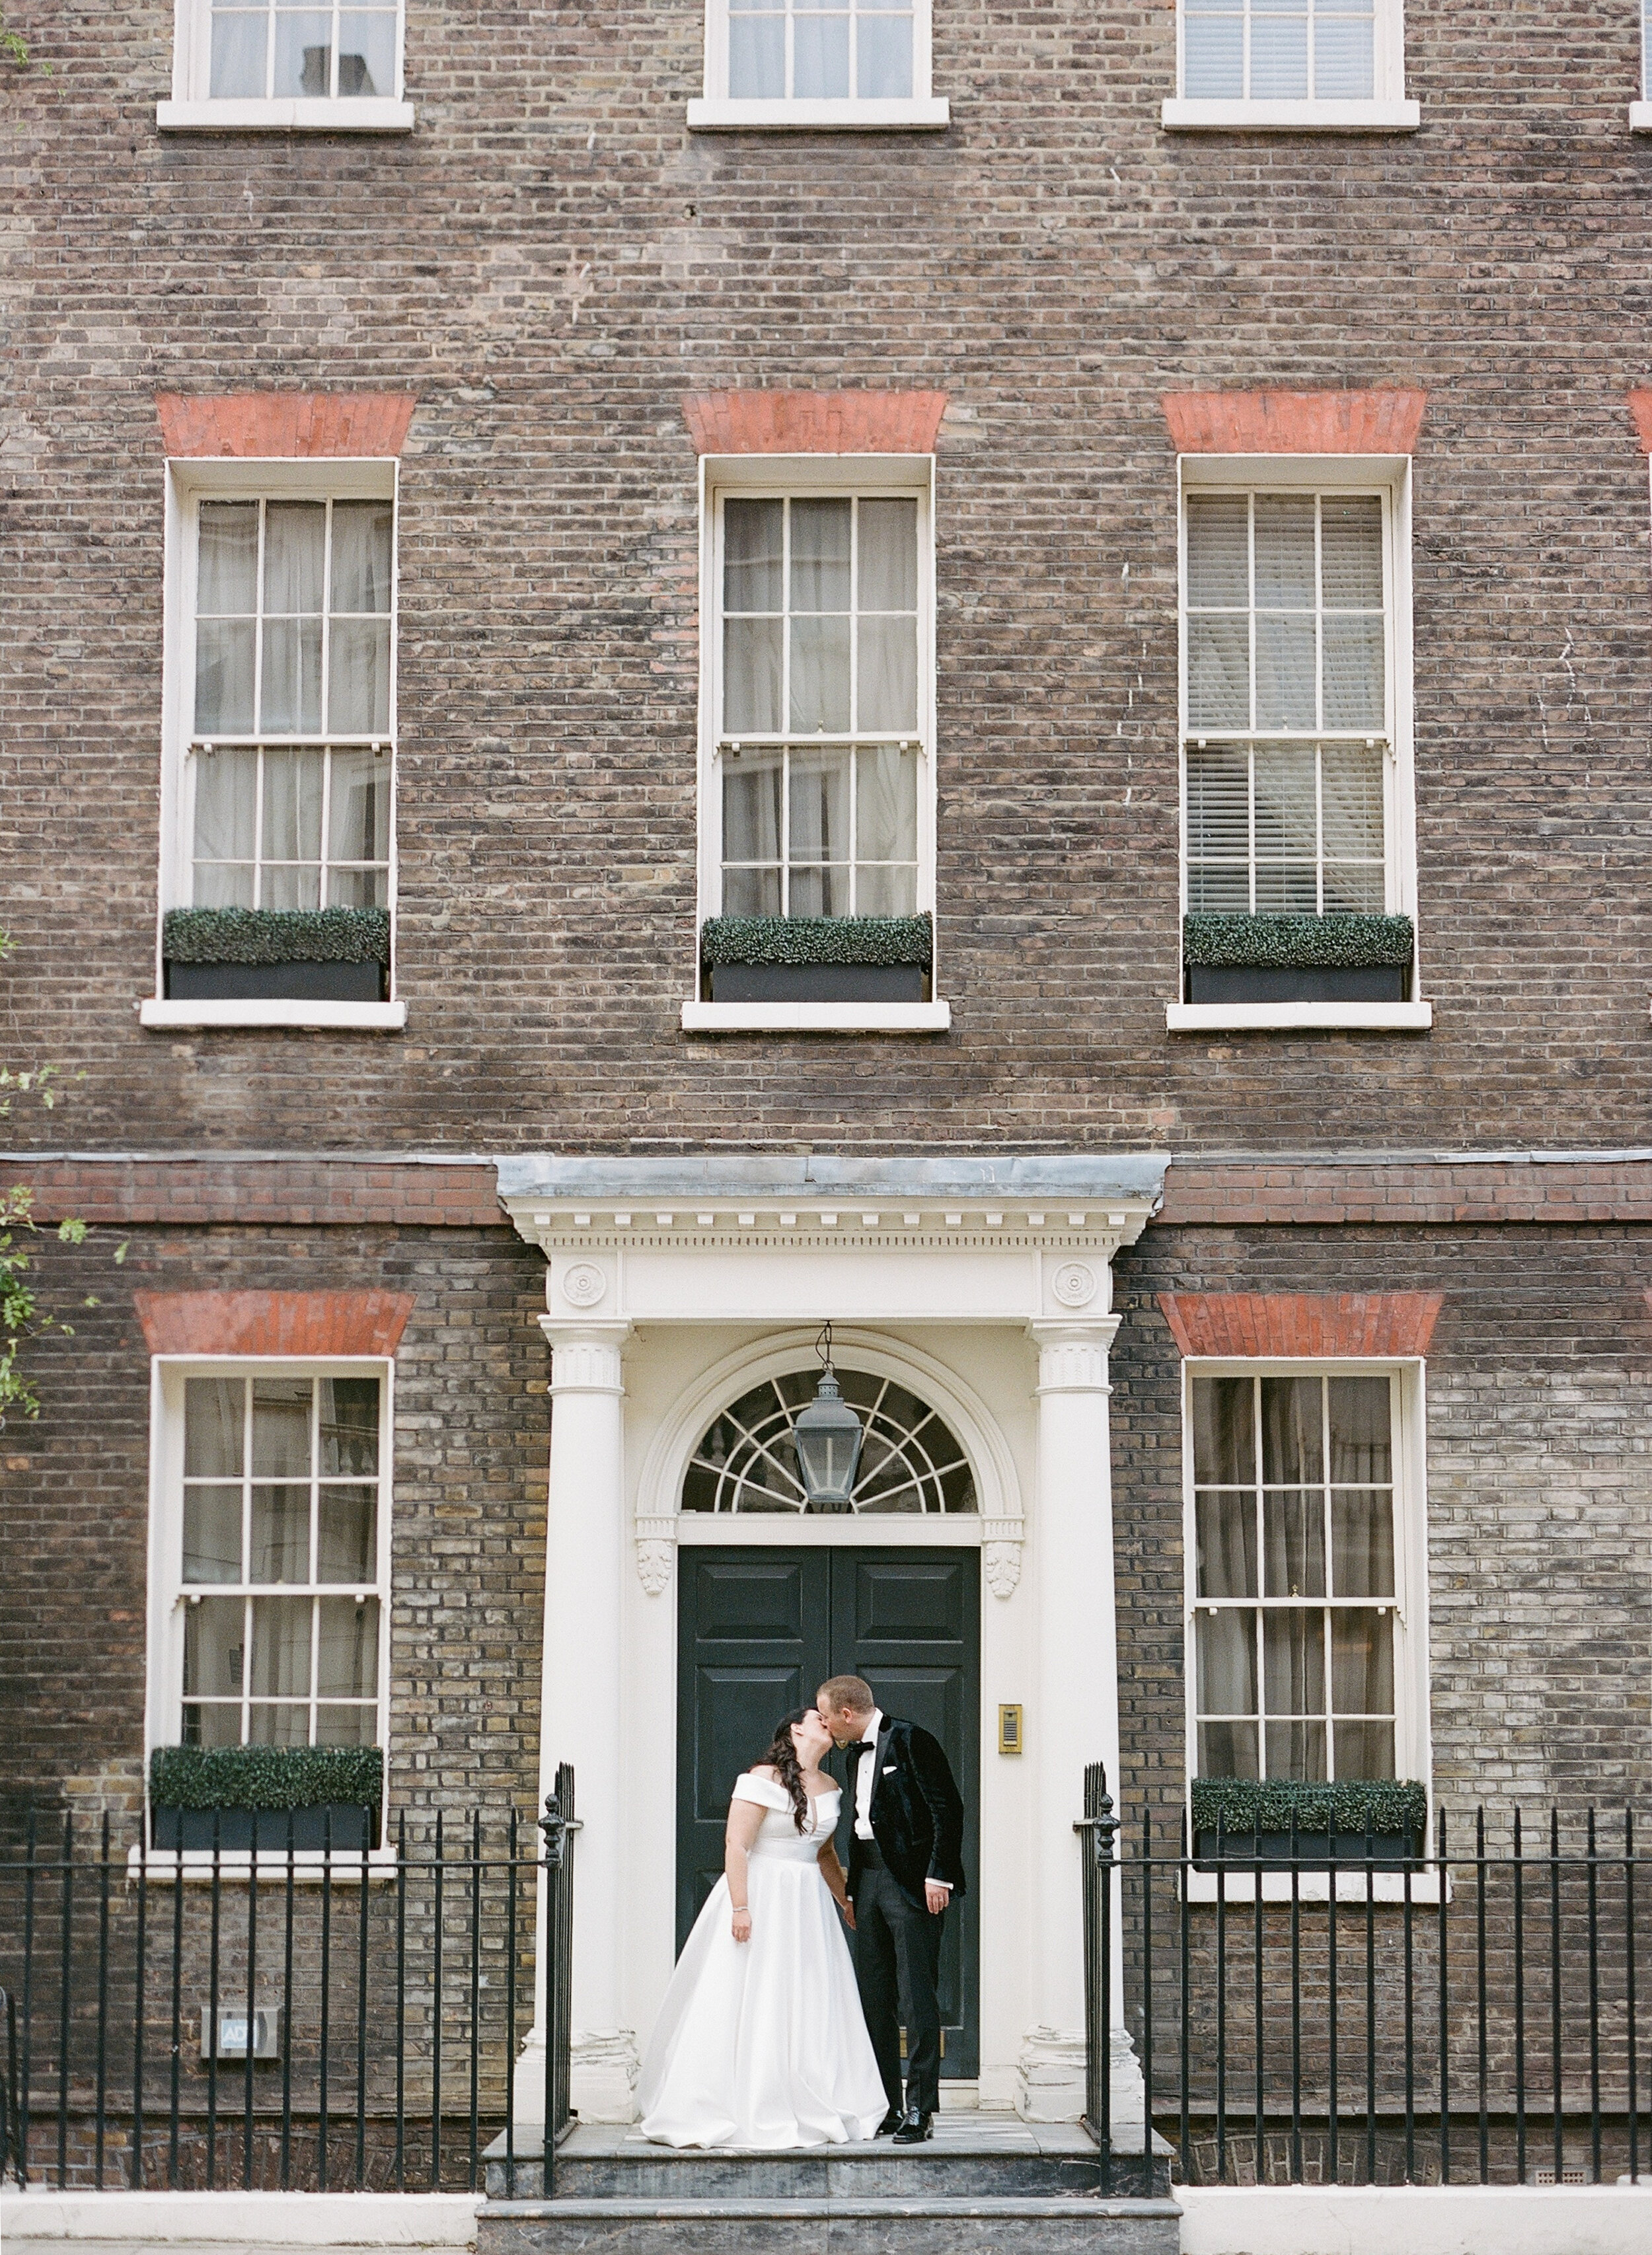 Lily & Sage | Luxury Wedding Planner Luxury Wedding Stylist Destination Wedding London Claridge’s Wedding London Wedding French Style Wedding White Wedding Green and White Wedding | Molly Carr